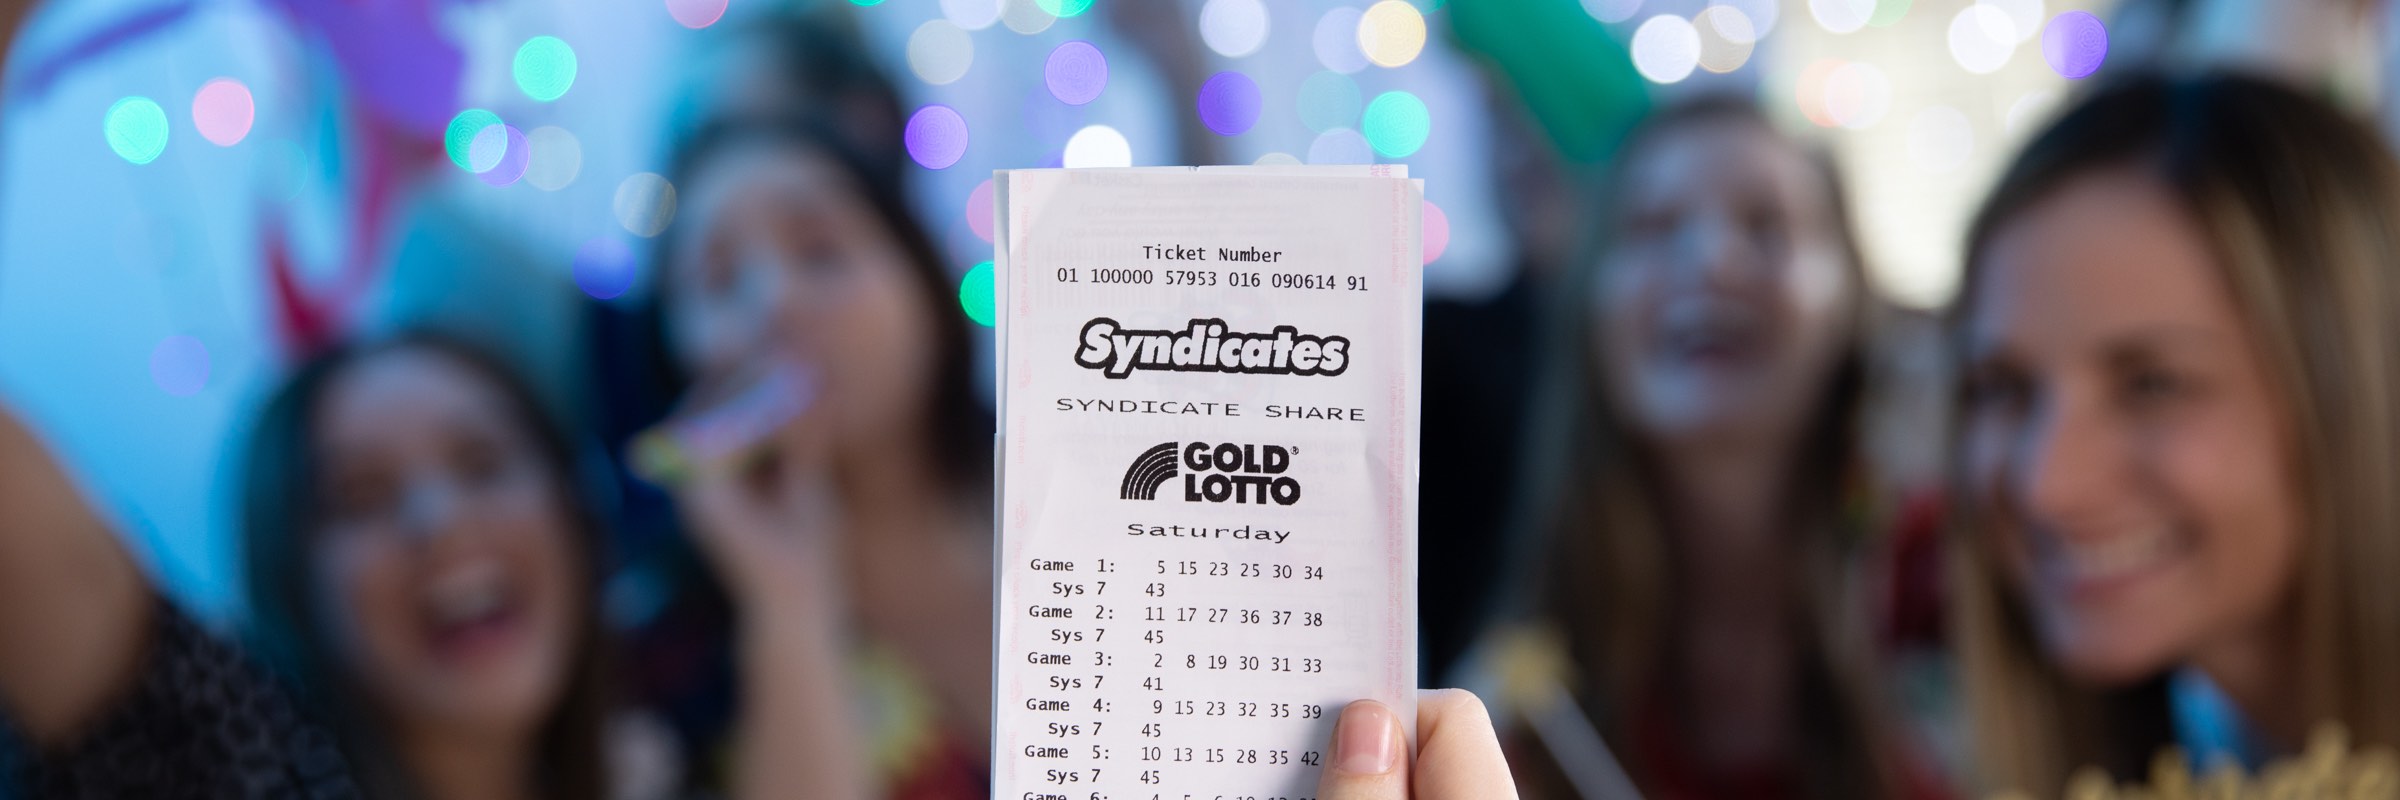 Saturday Lotto Syndicate Results